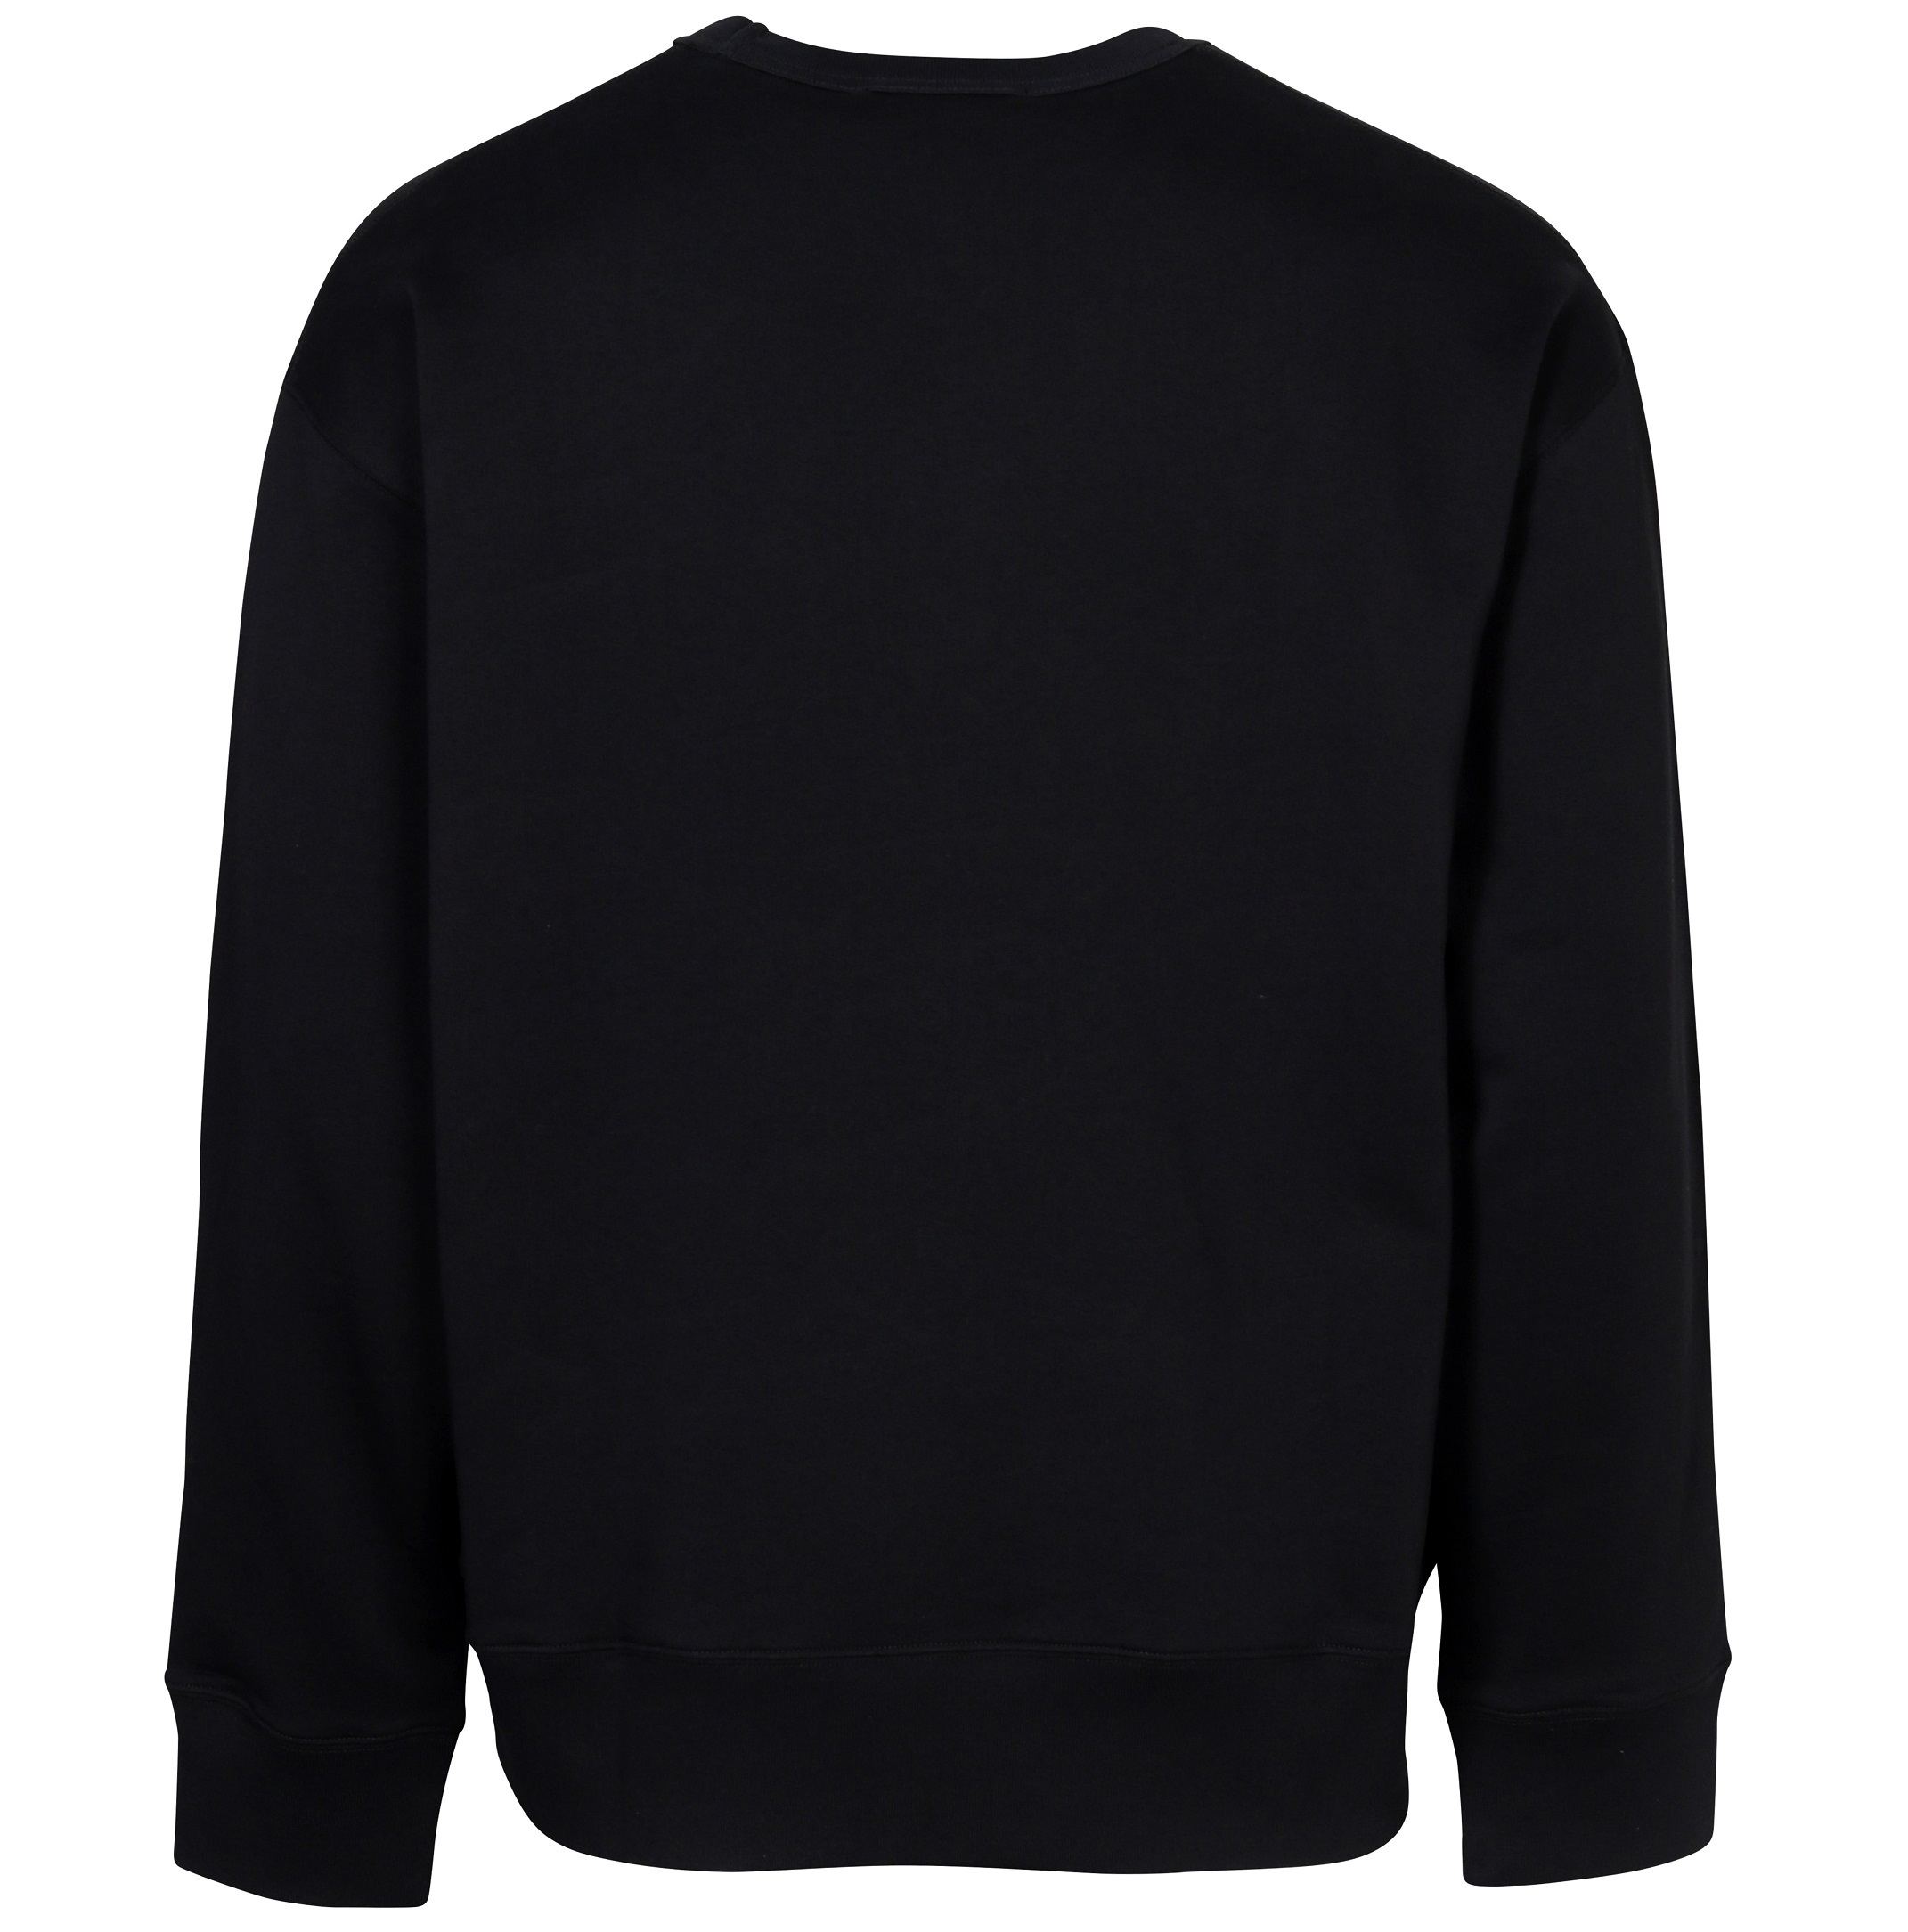 ACNE STUDIOS Oversize Face Sweatshirt in Black L